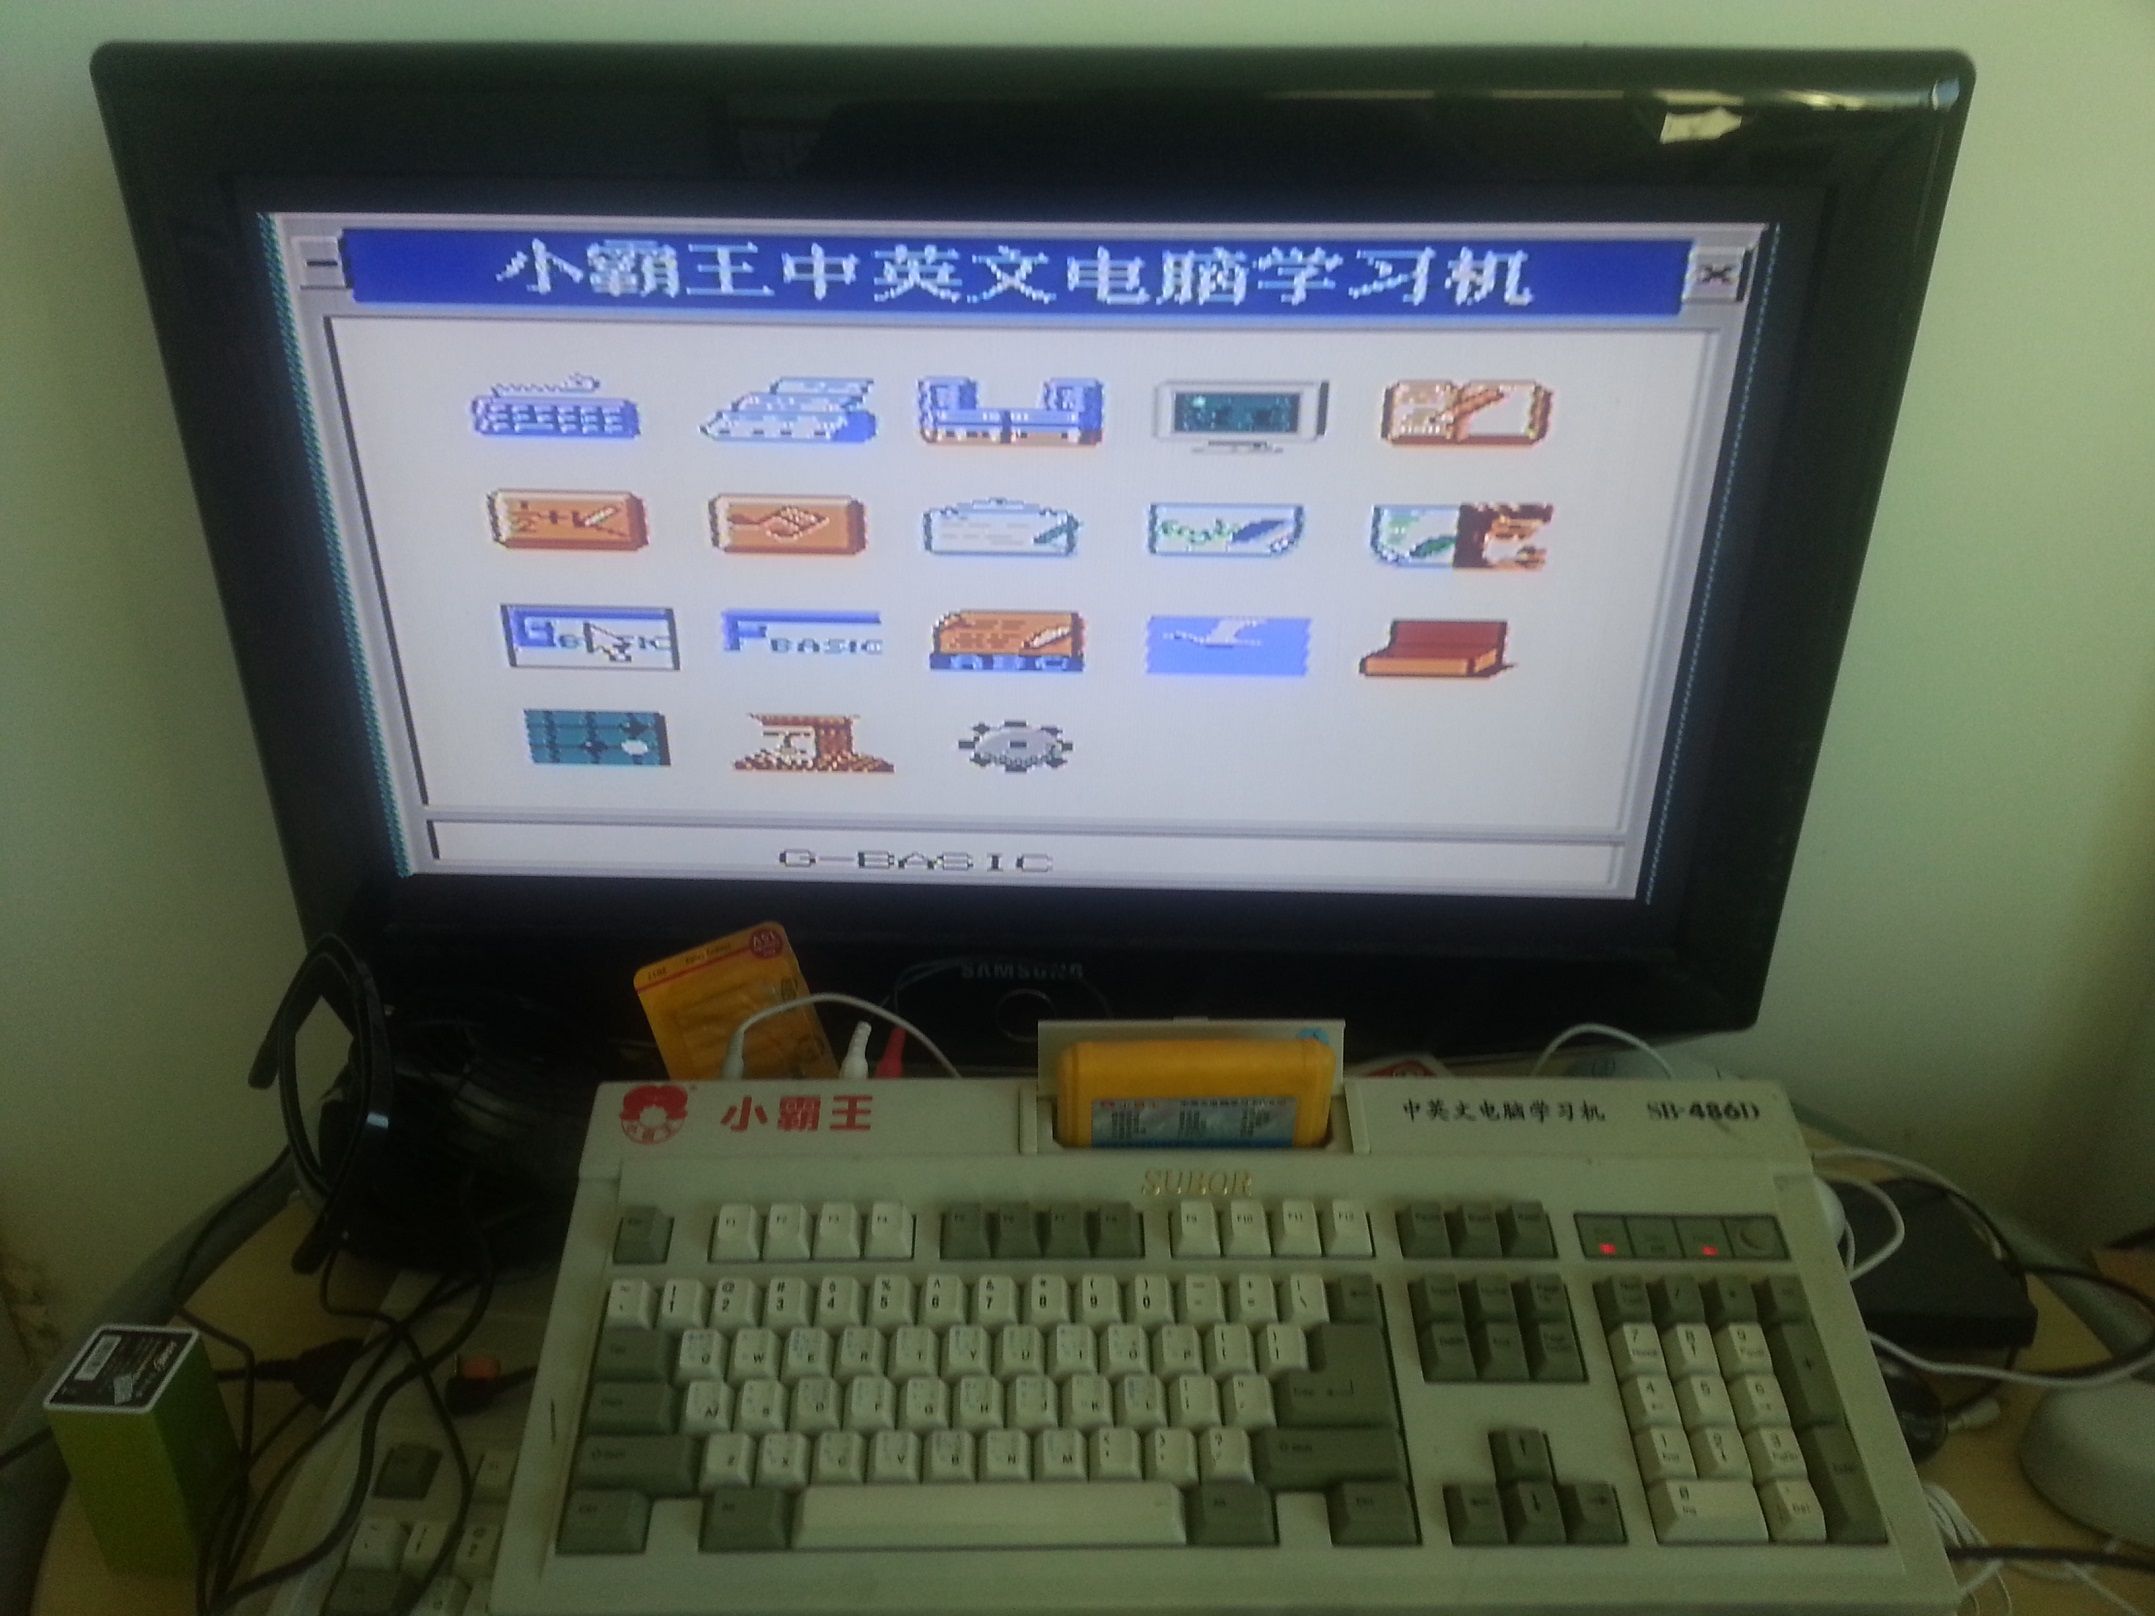 5d2bbeb02048ebfb7ed61202b69ca206 The Childhood Memory - Subor Famicom Clone SB-486D (Xiao Ba Wang) 8 bit Nintendo Entertainment System Subor 